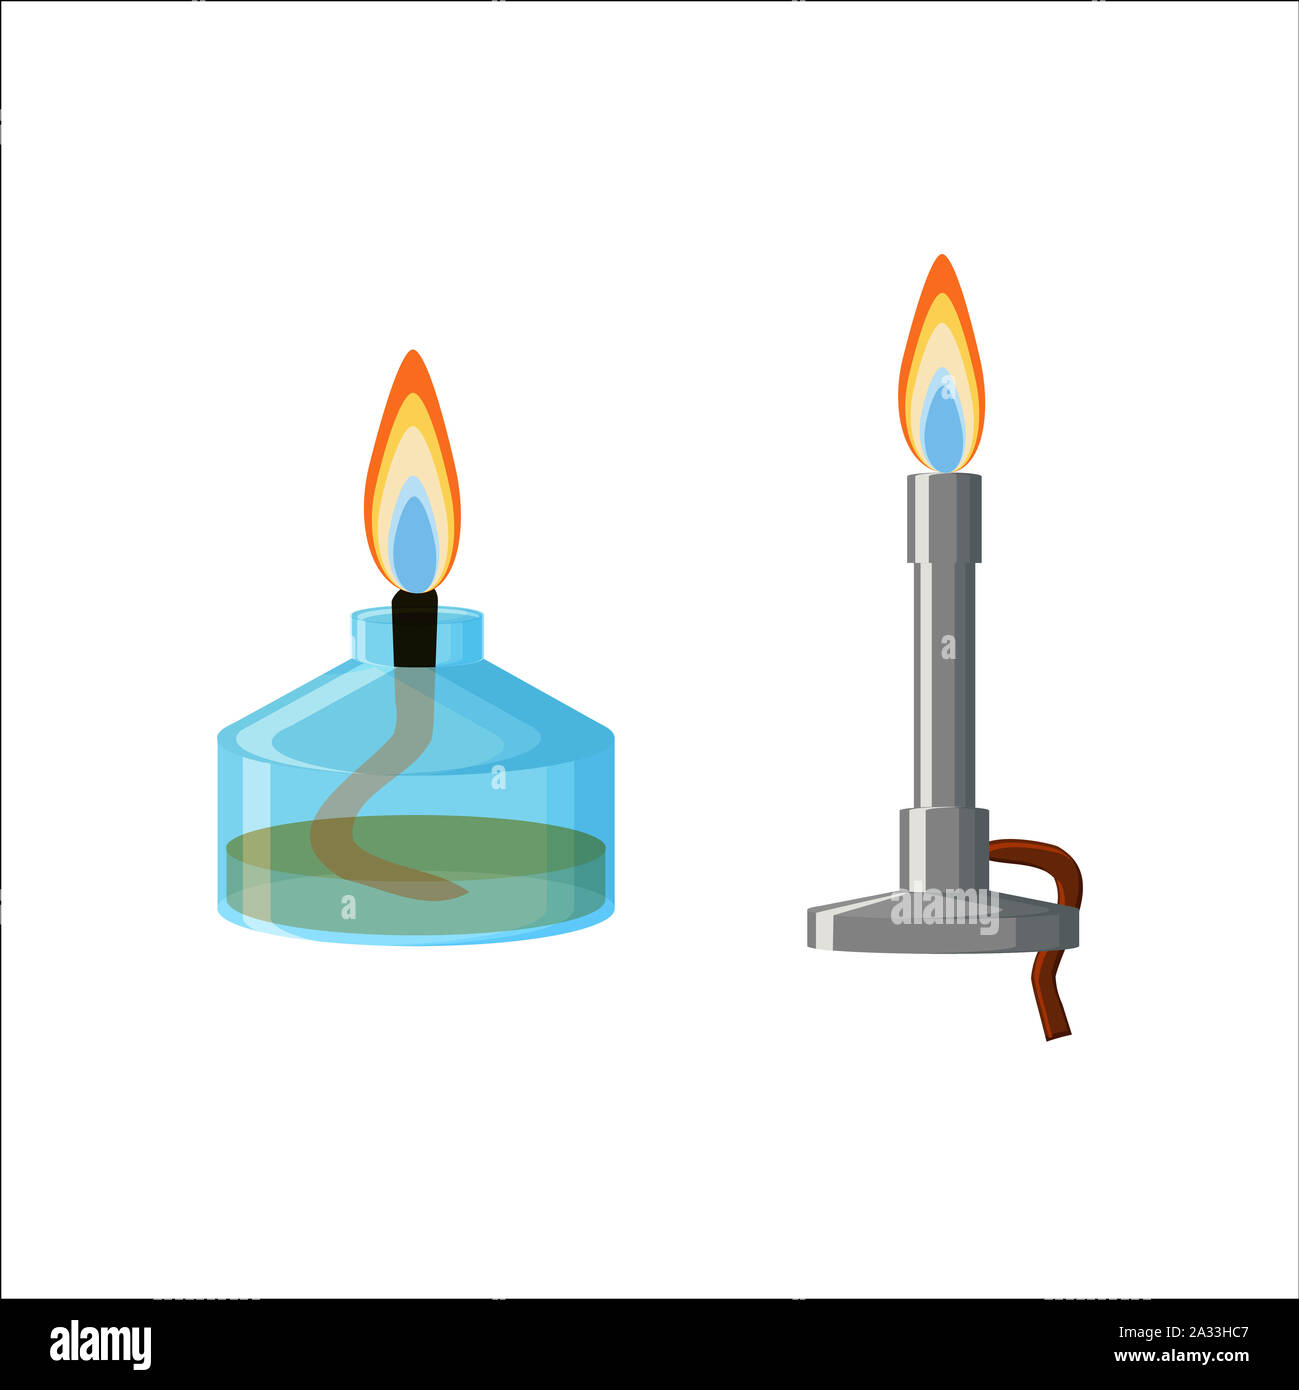 Alcohol spirit burner and Bunsen burner, illustration Stock Photo